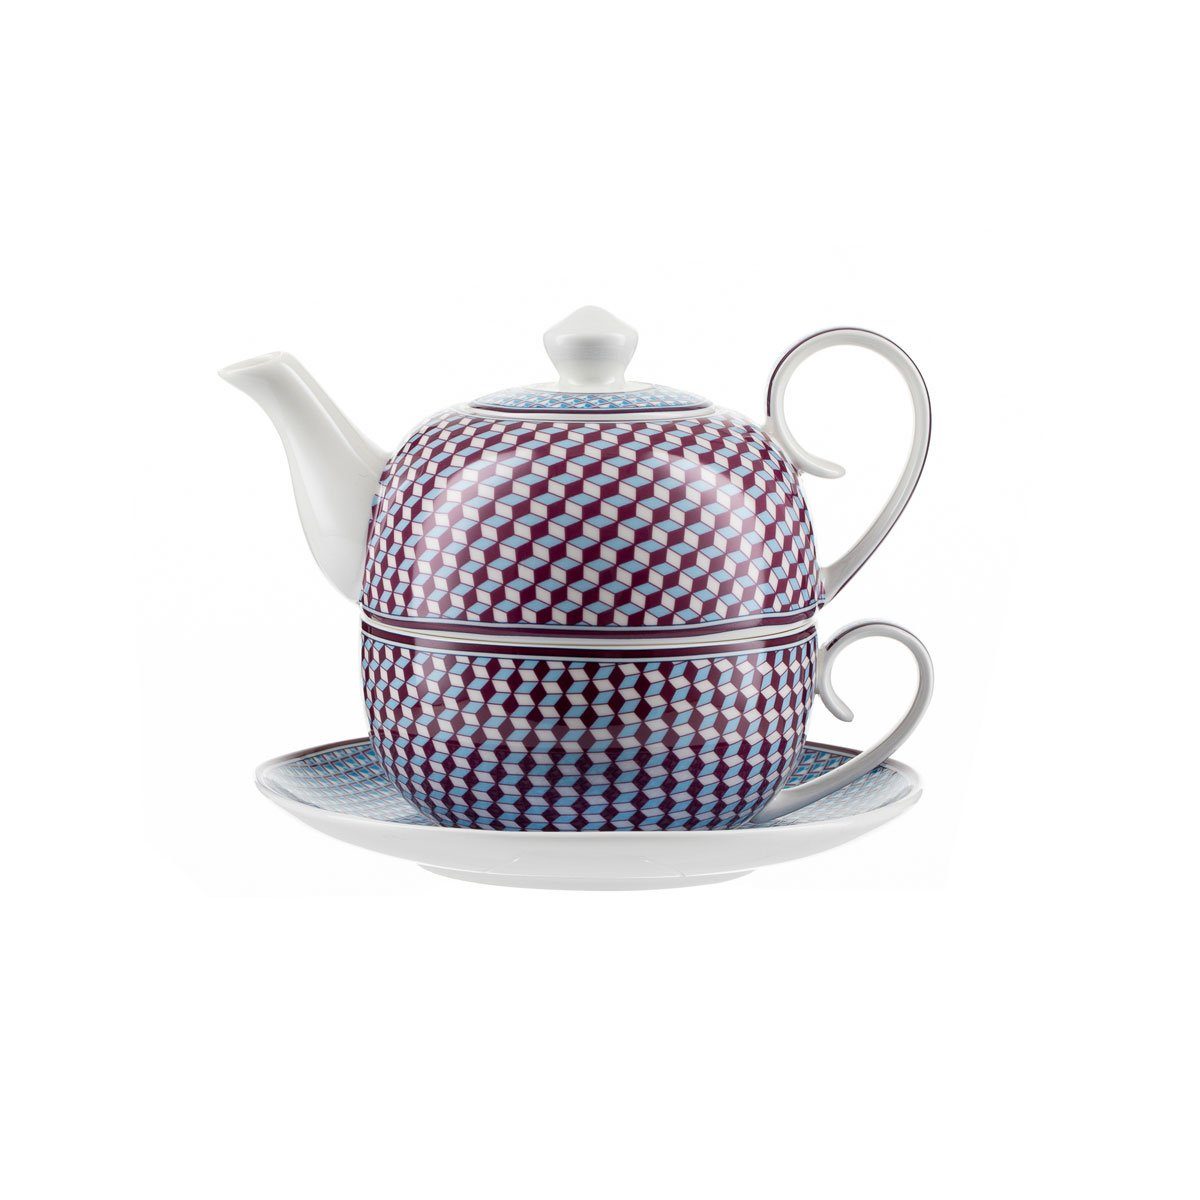 Jameson + Tailor Teekanne Teekanne mit Motiv, Tea for One Brillantporzellan